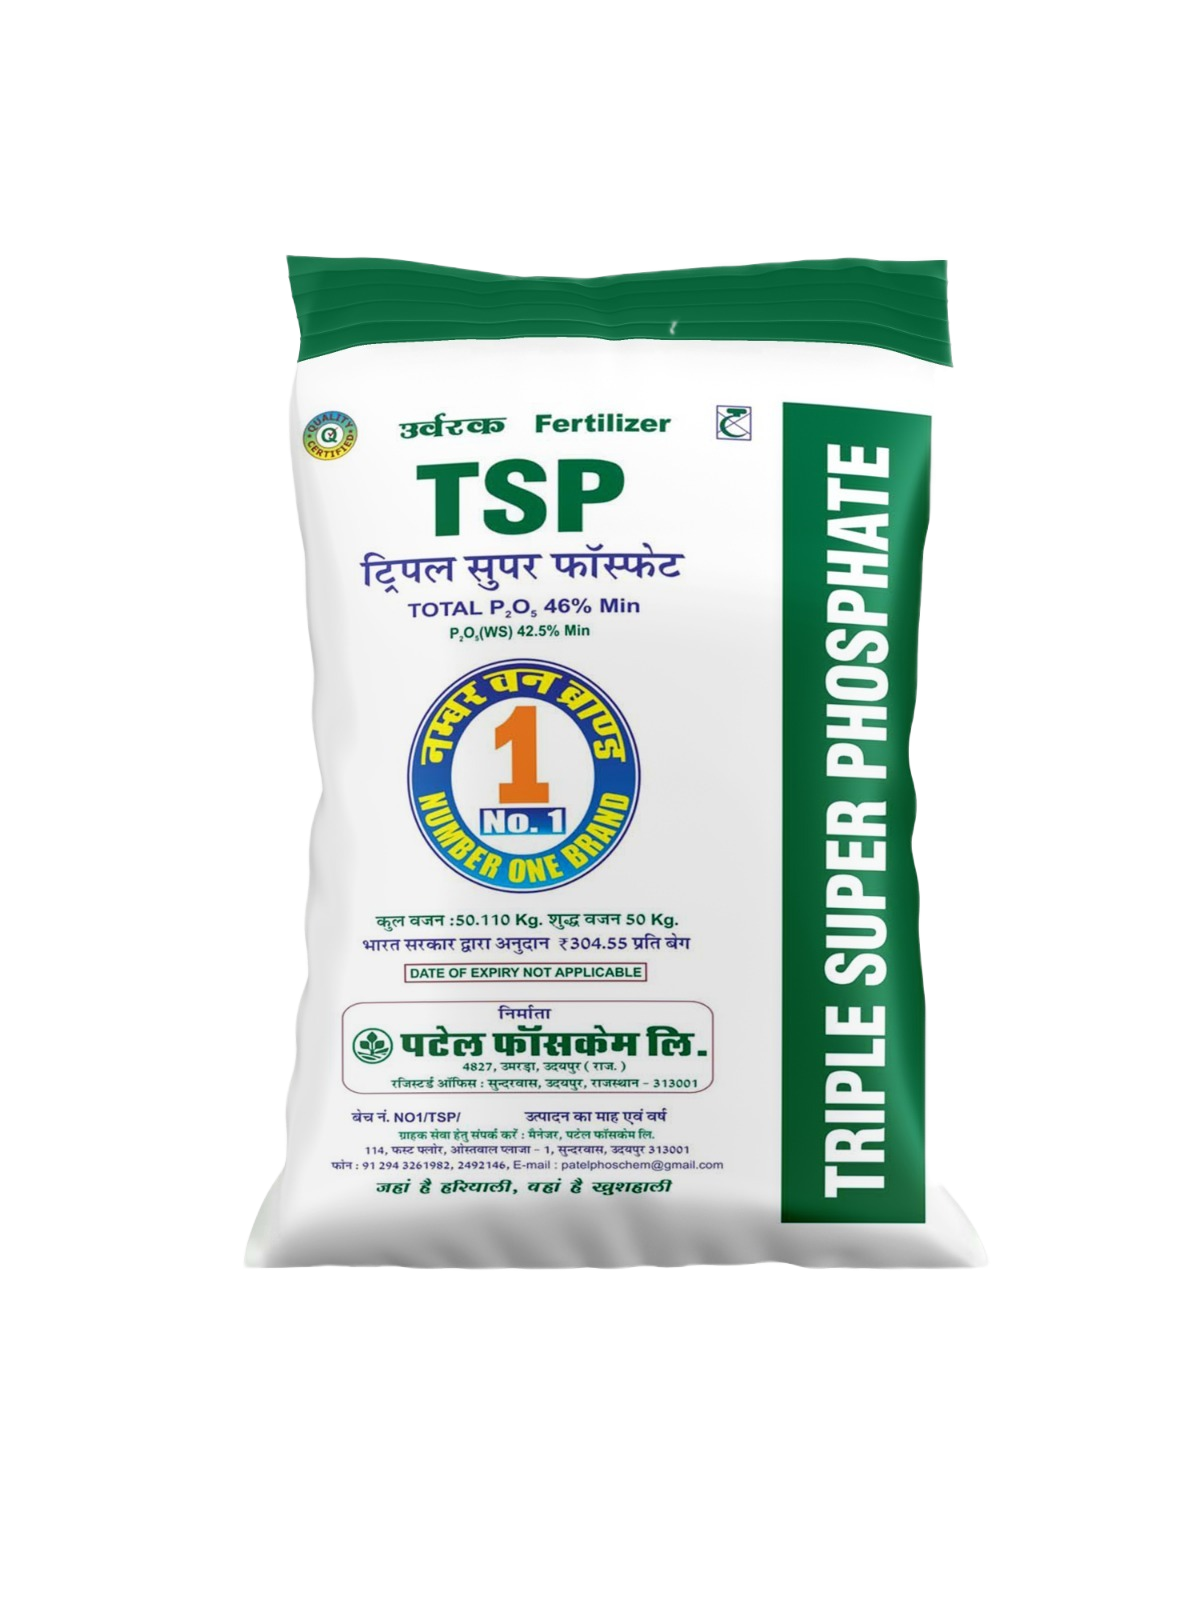 TSP fertilizer